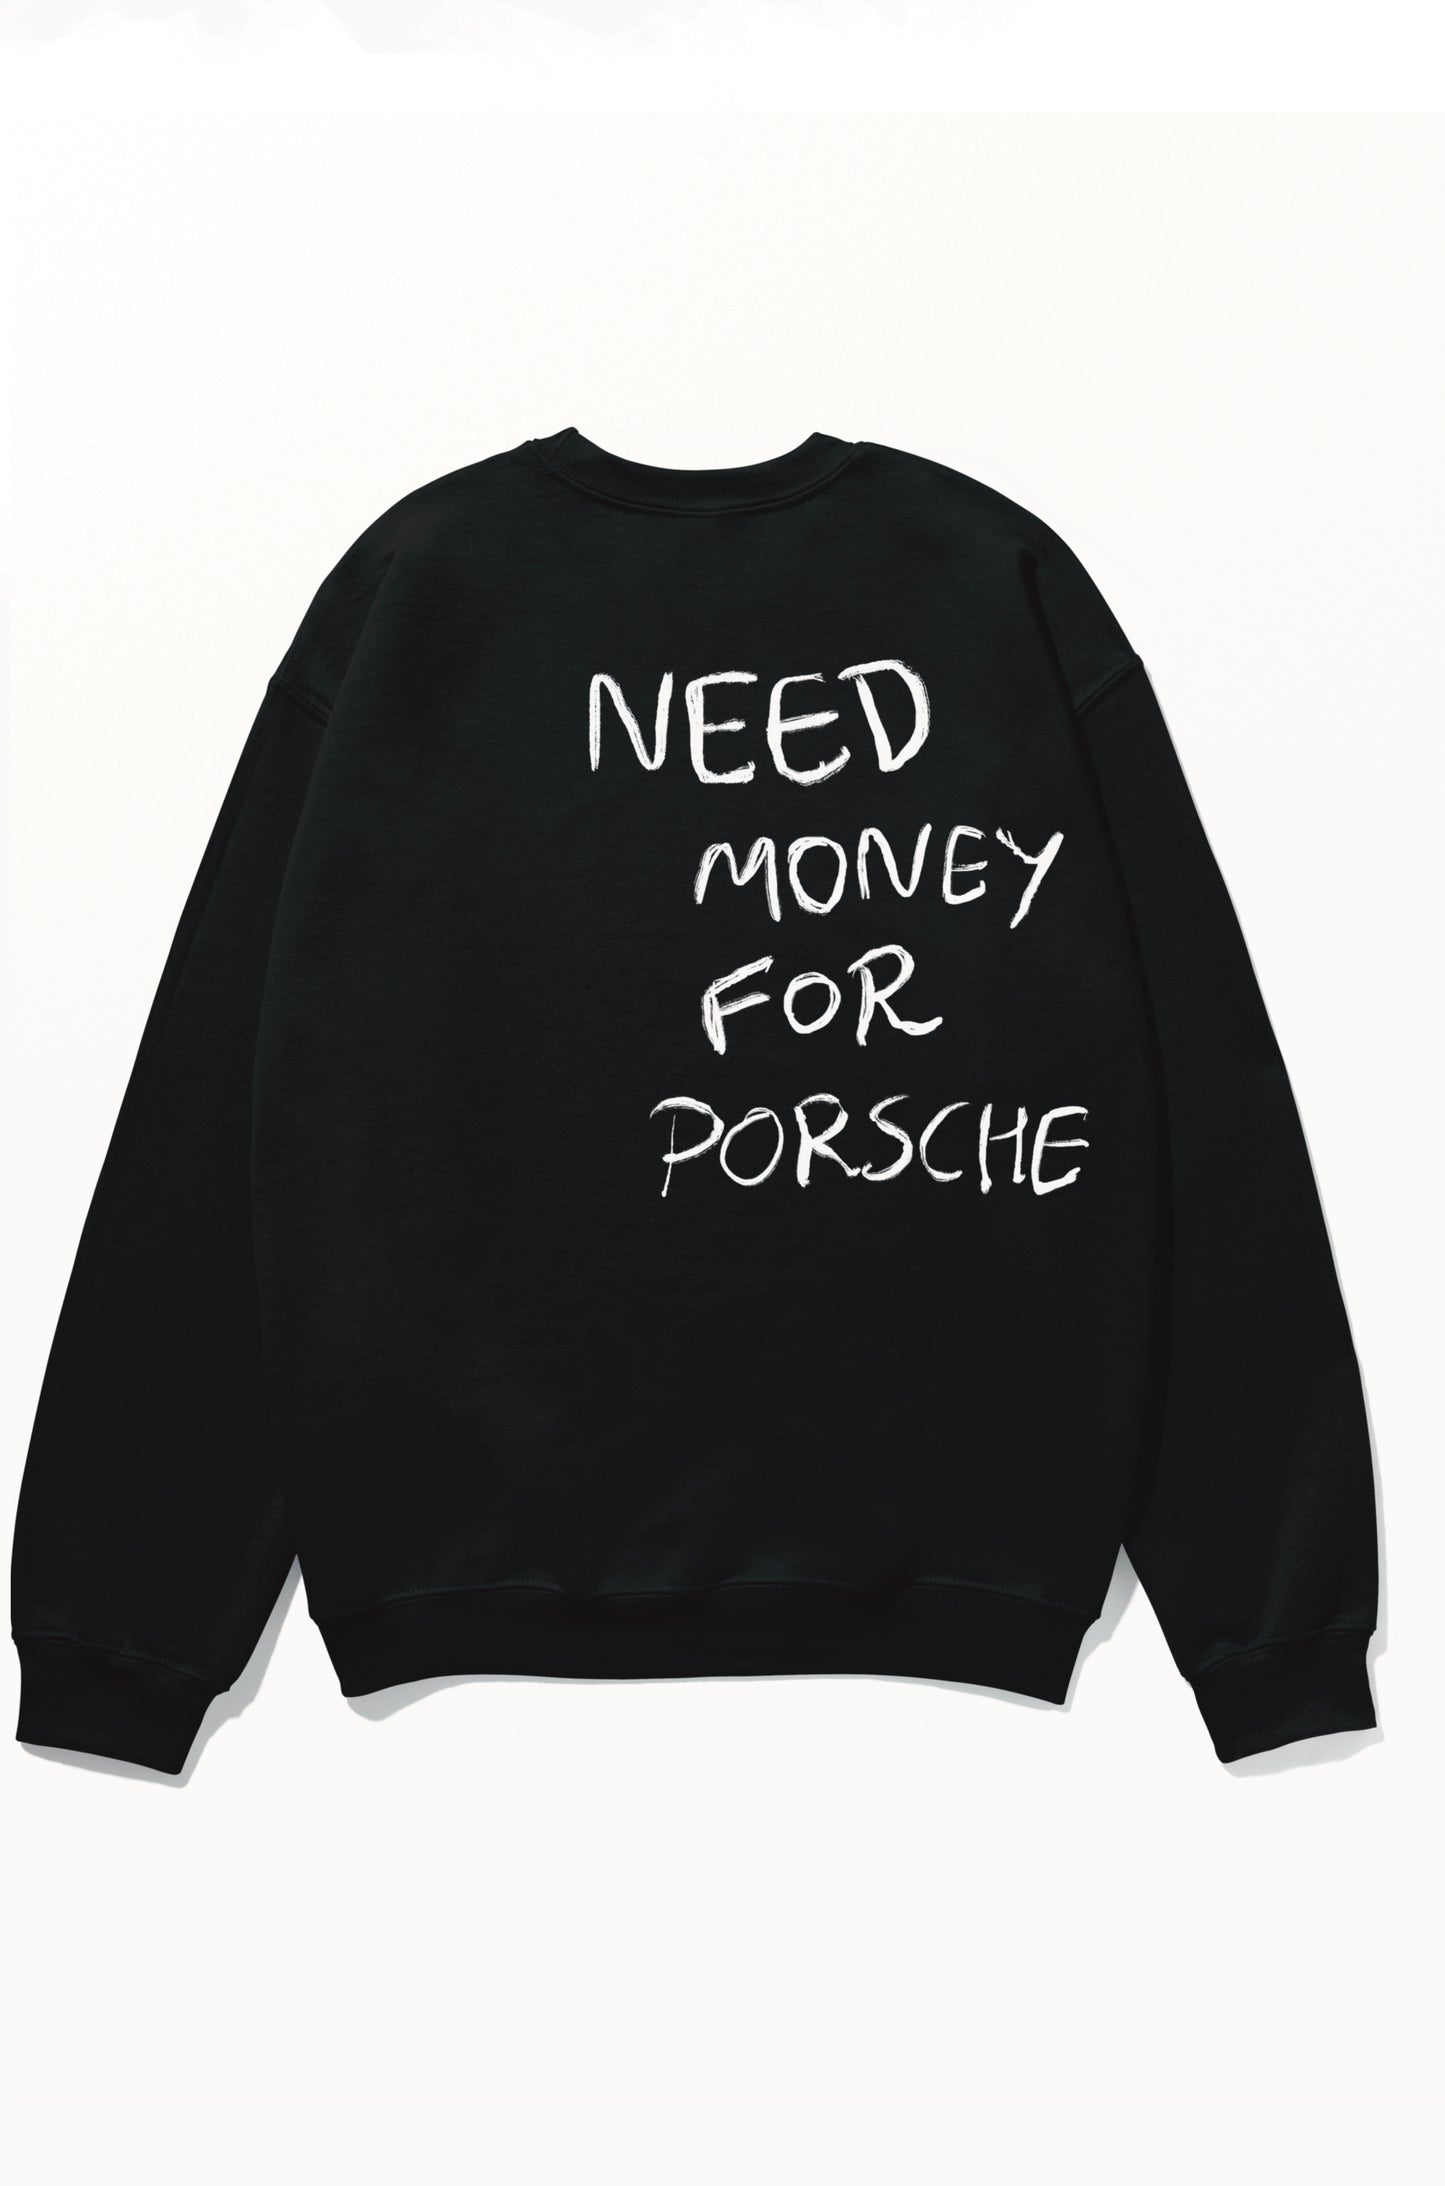 Collecting money for dream car sweatshirt